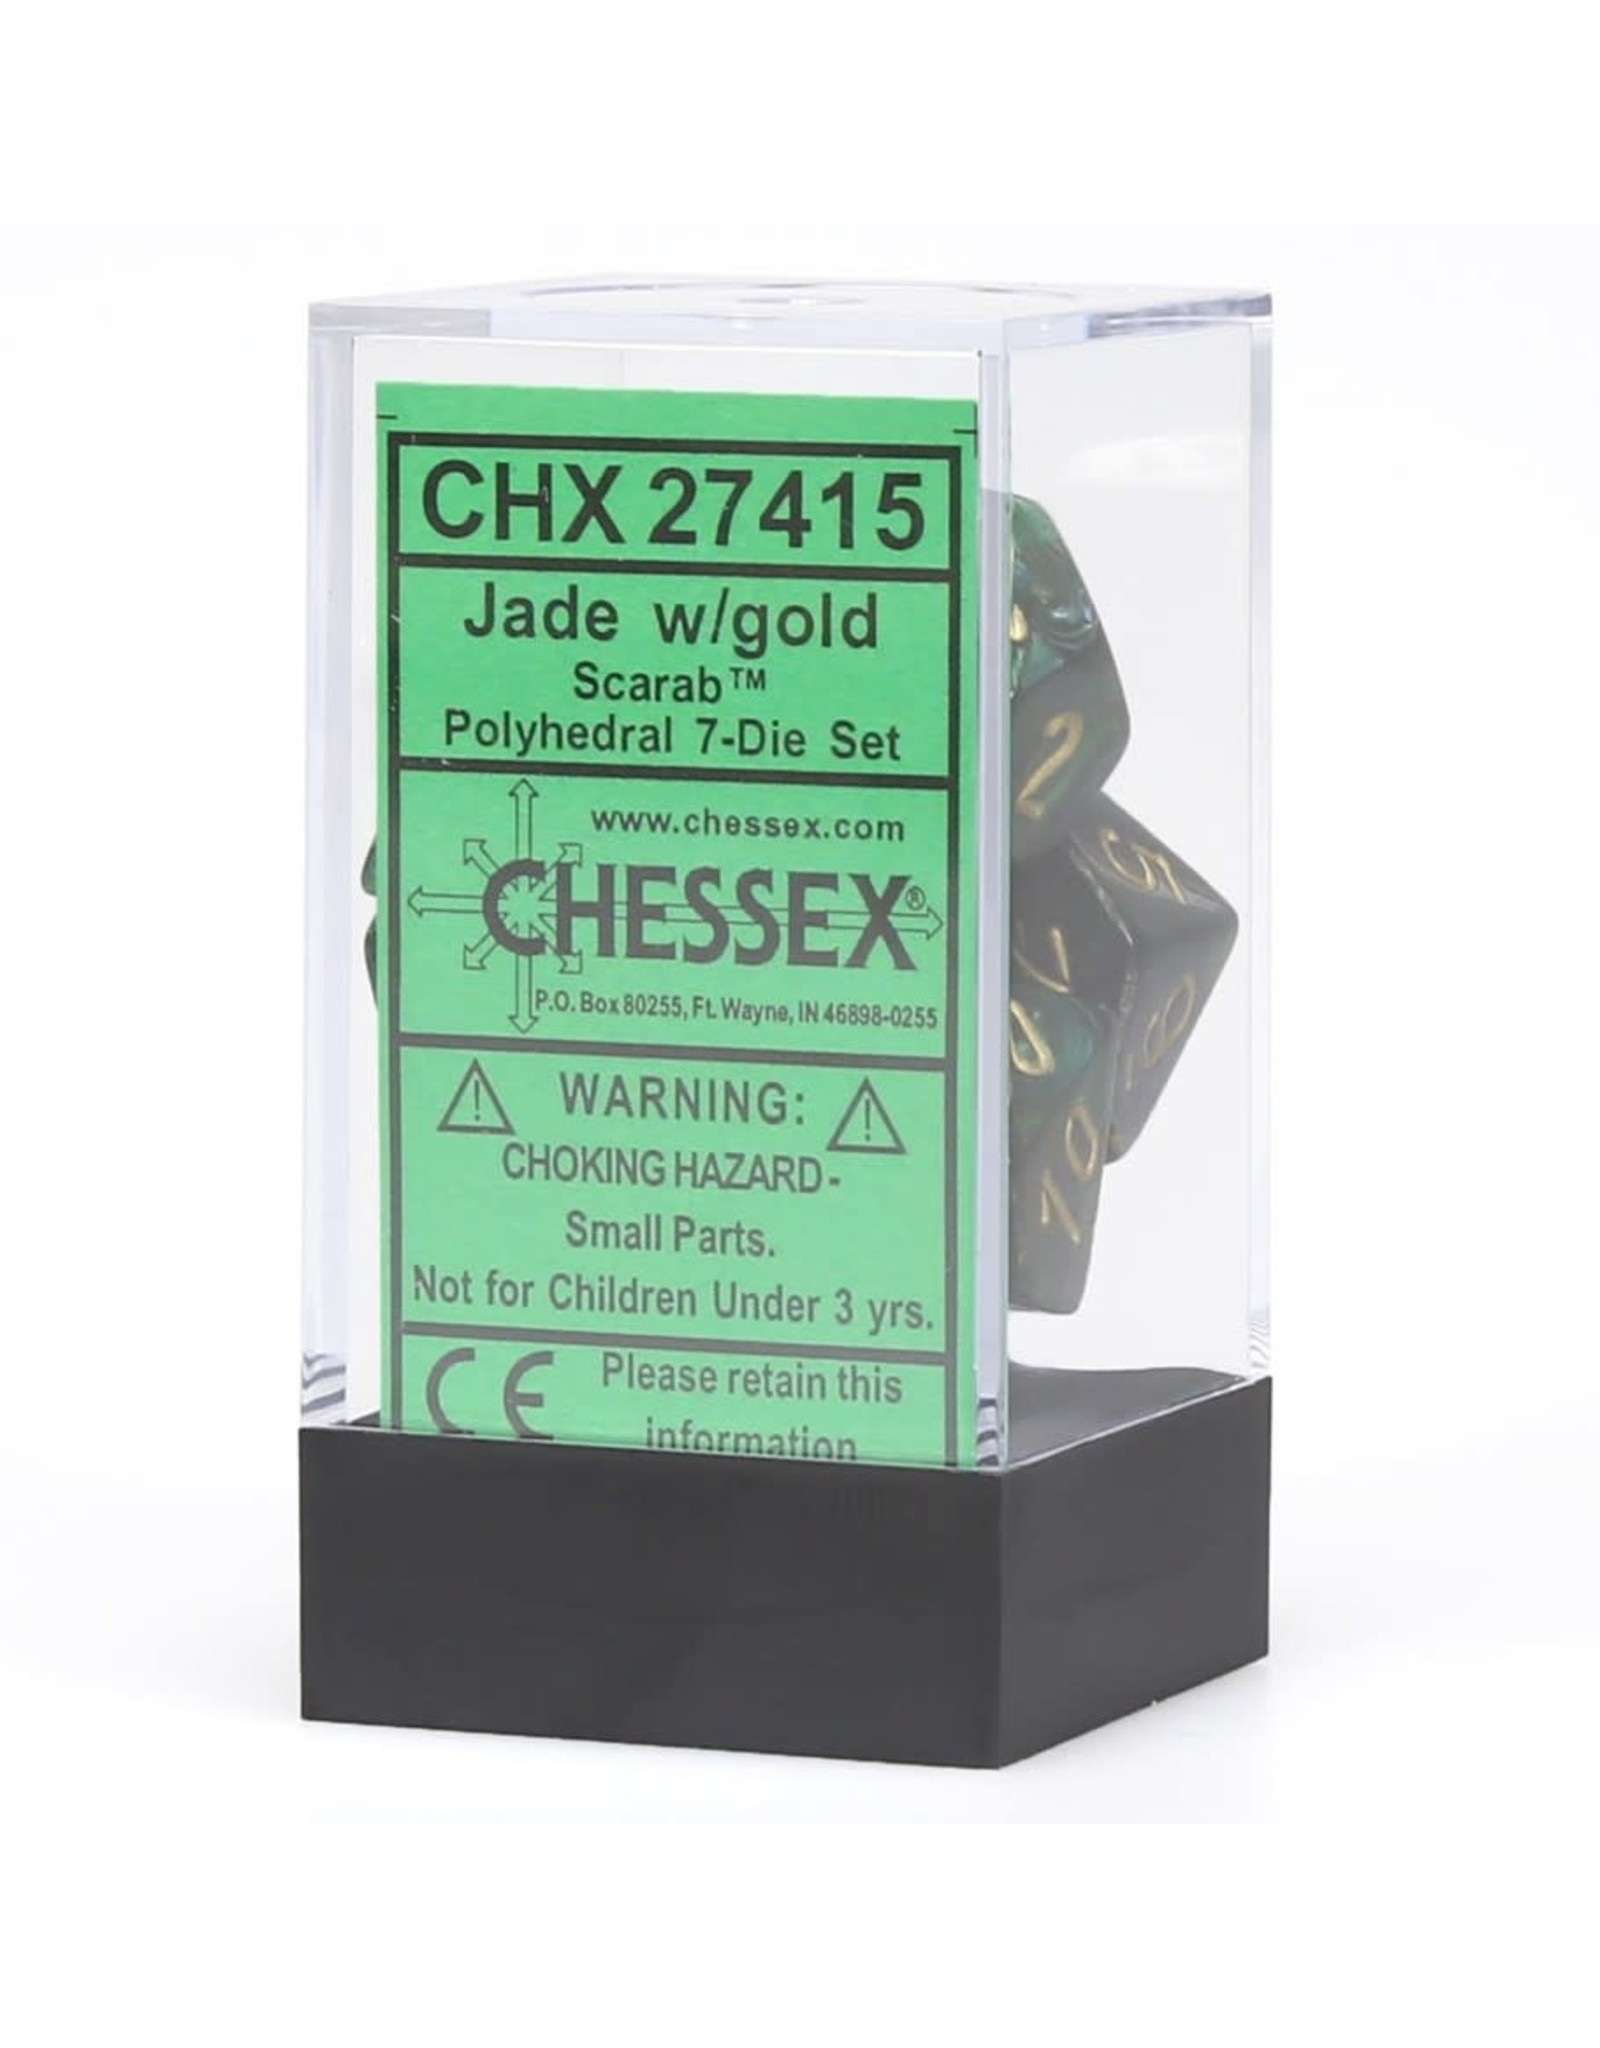 Chessex Polyhedral 7 Dice Set Scarab Jade w/Gold CHX27415